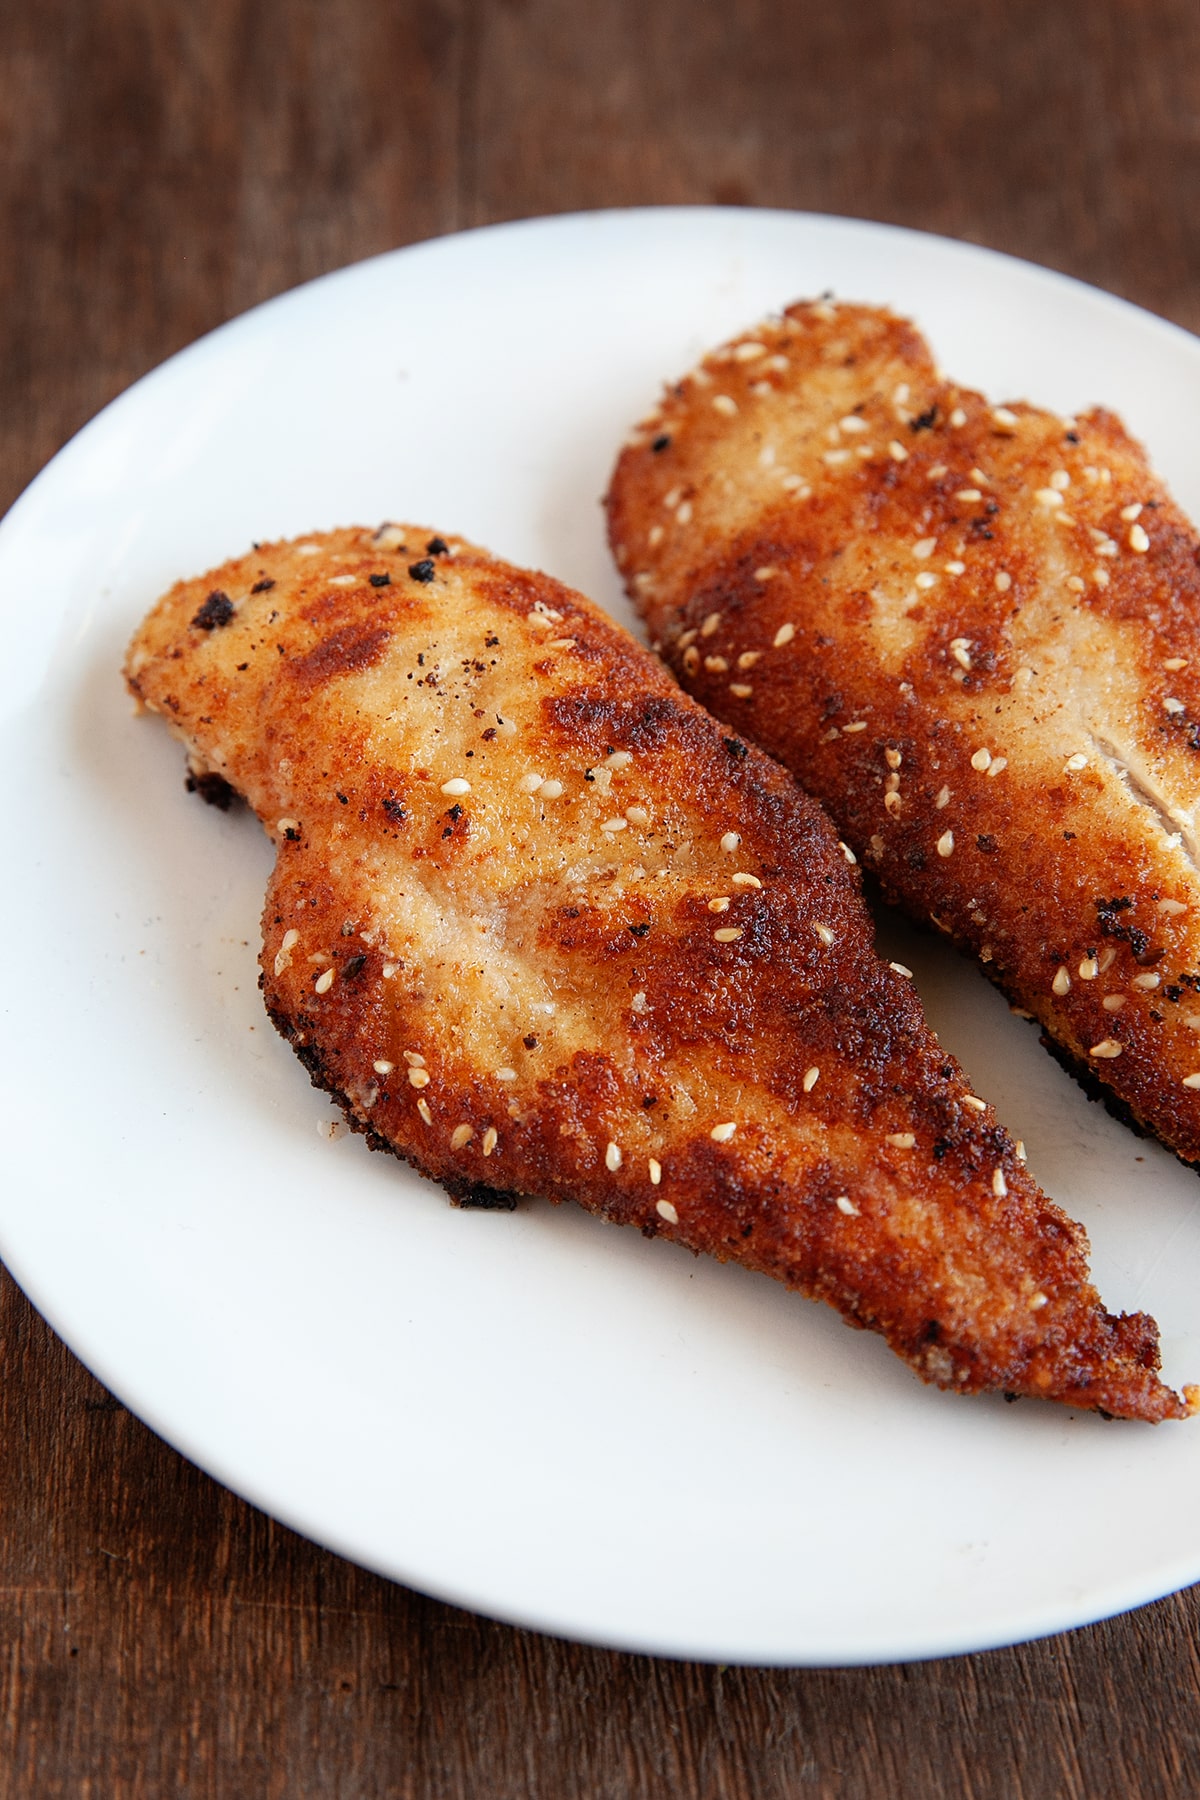 Fried crispy chicken. 